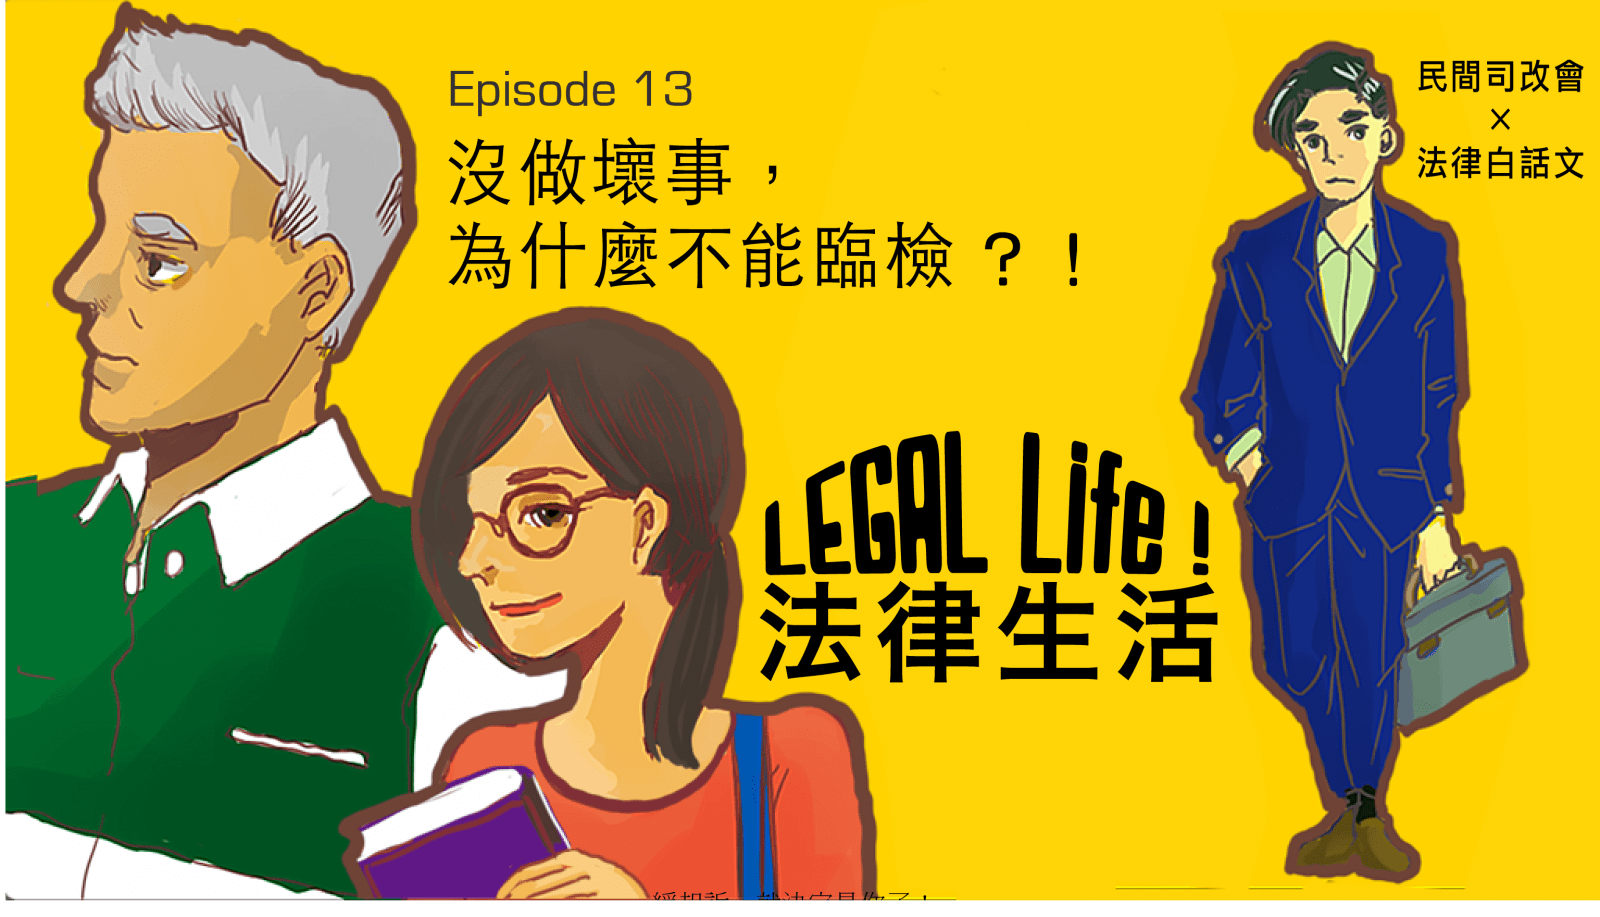 2016/08/legal-life.png